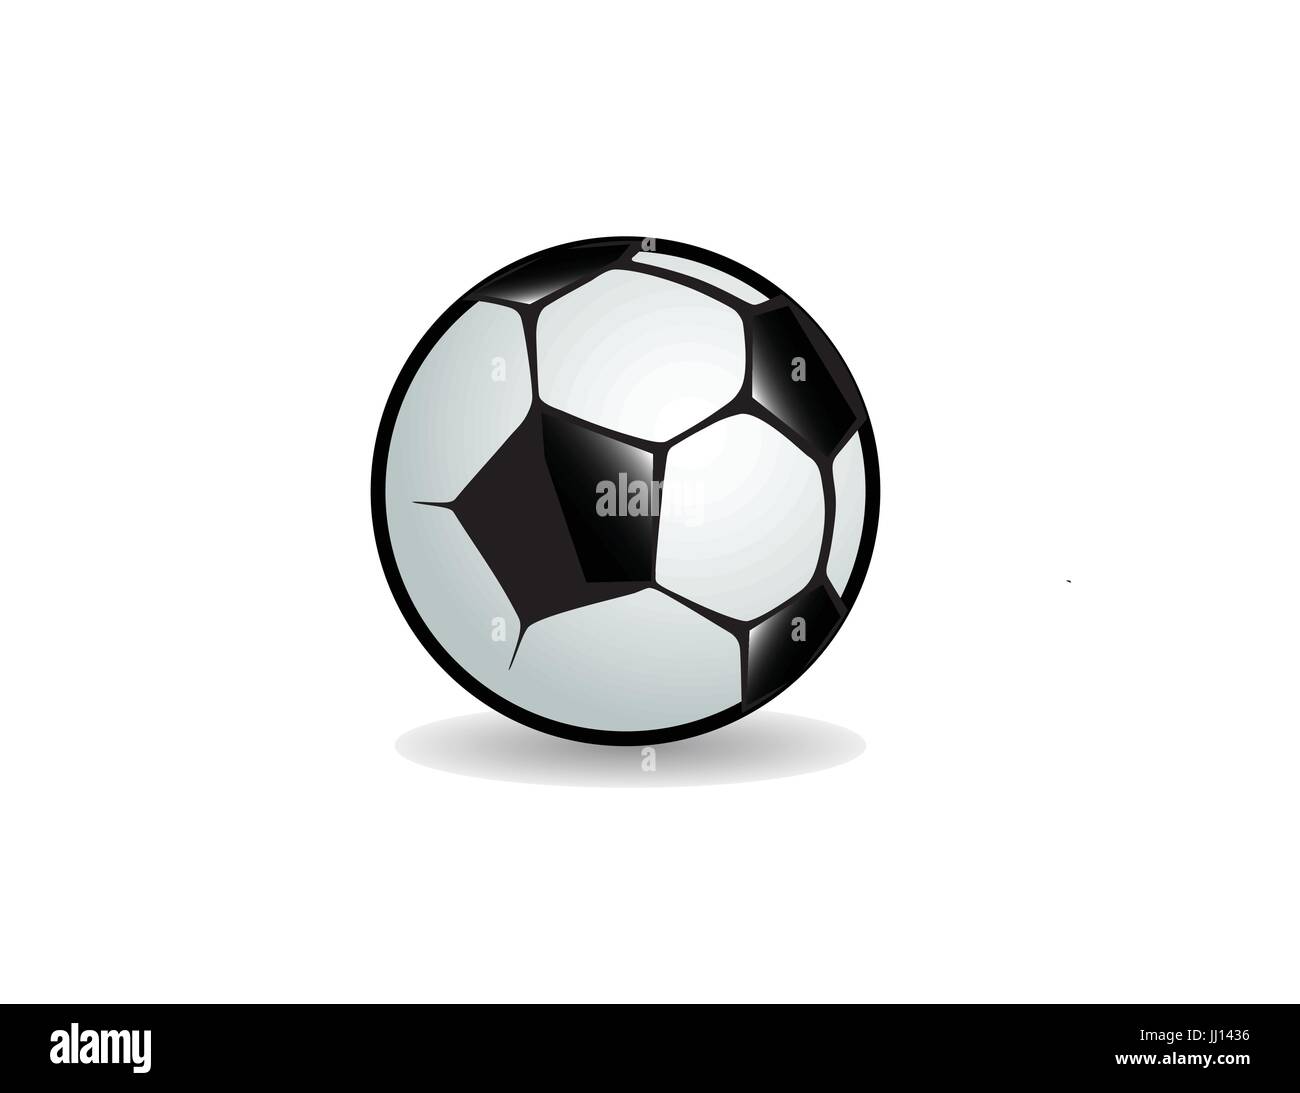 Futbol logo fotografías e imágenes de alta resolución - Alamy